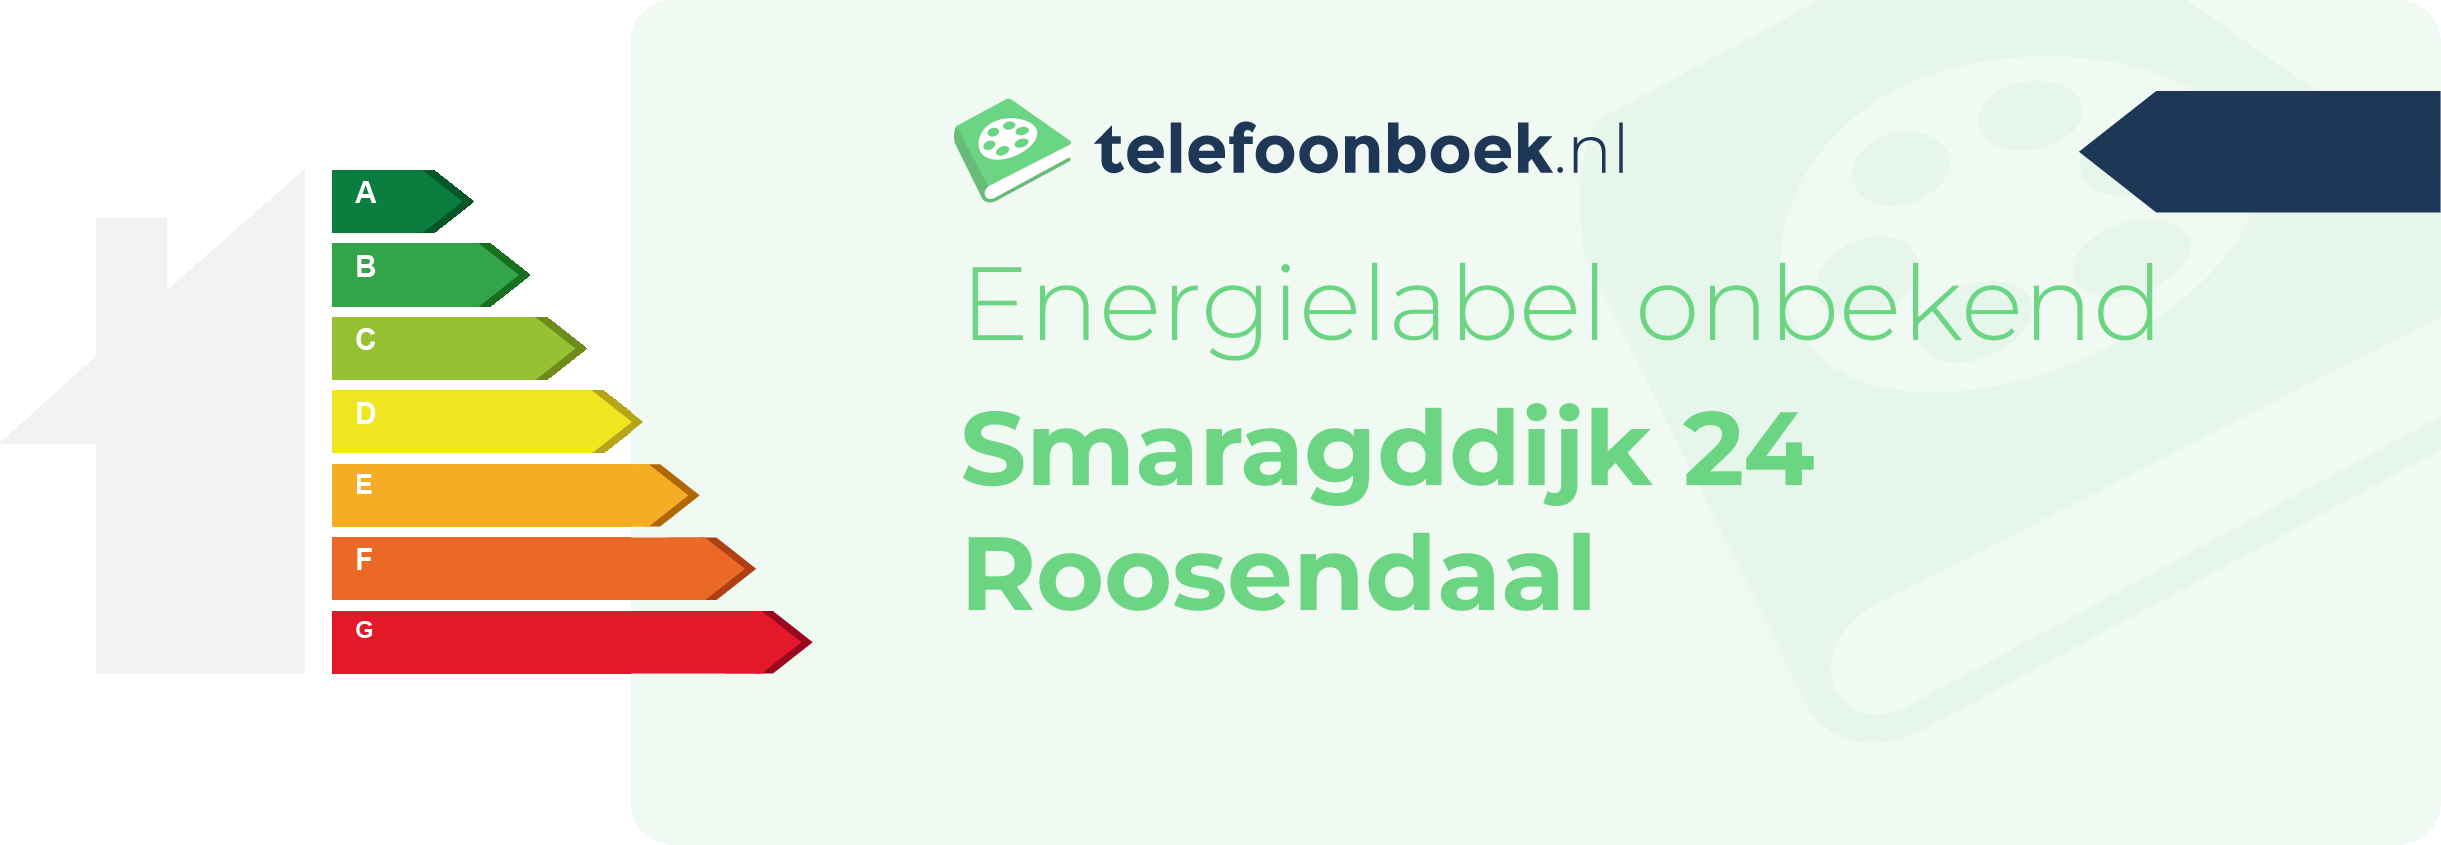 Energielabel Smaragddijk 24 Roosendaal